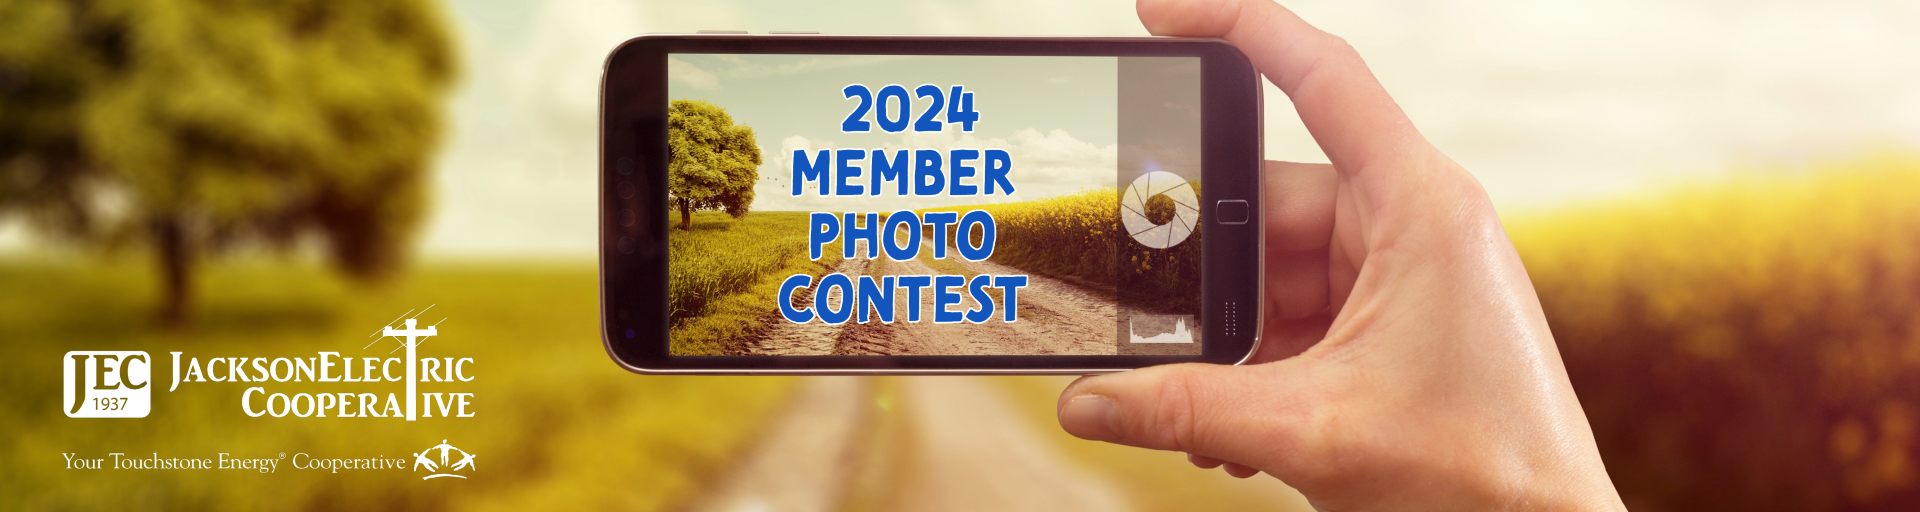 2024 Member Photo Contest